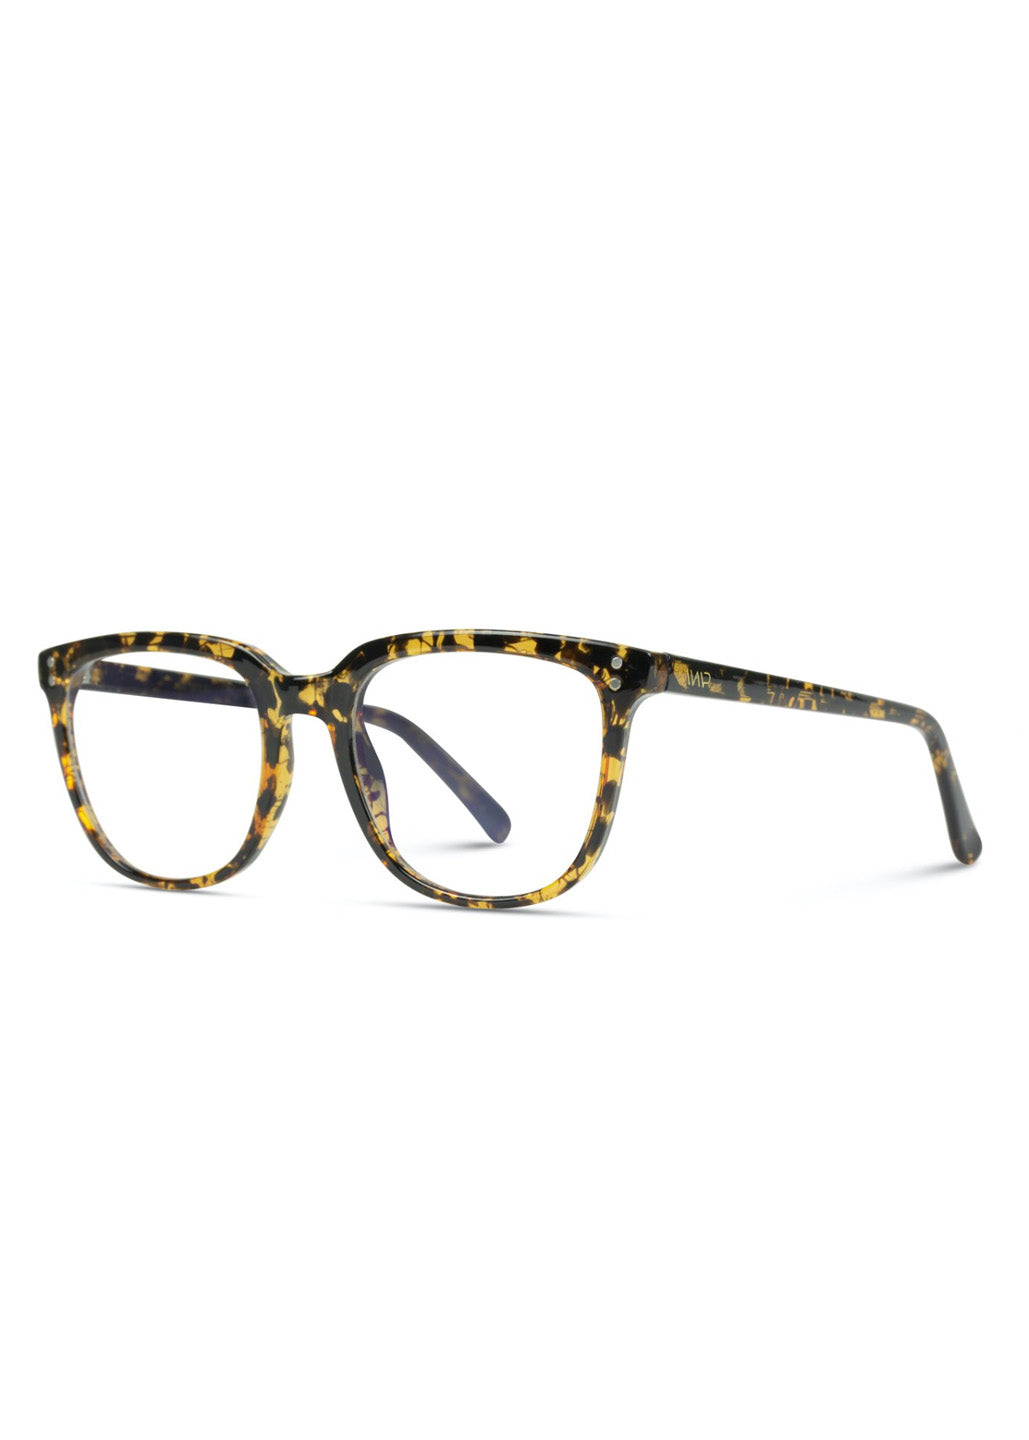 Brown Tortoise Frame Blue Light Glasses - FINAL SALE Accessories